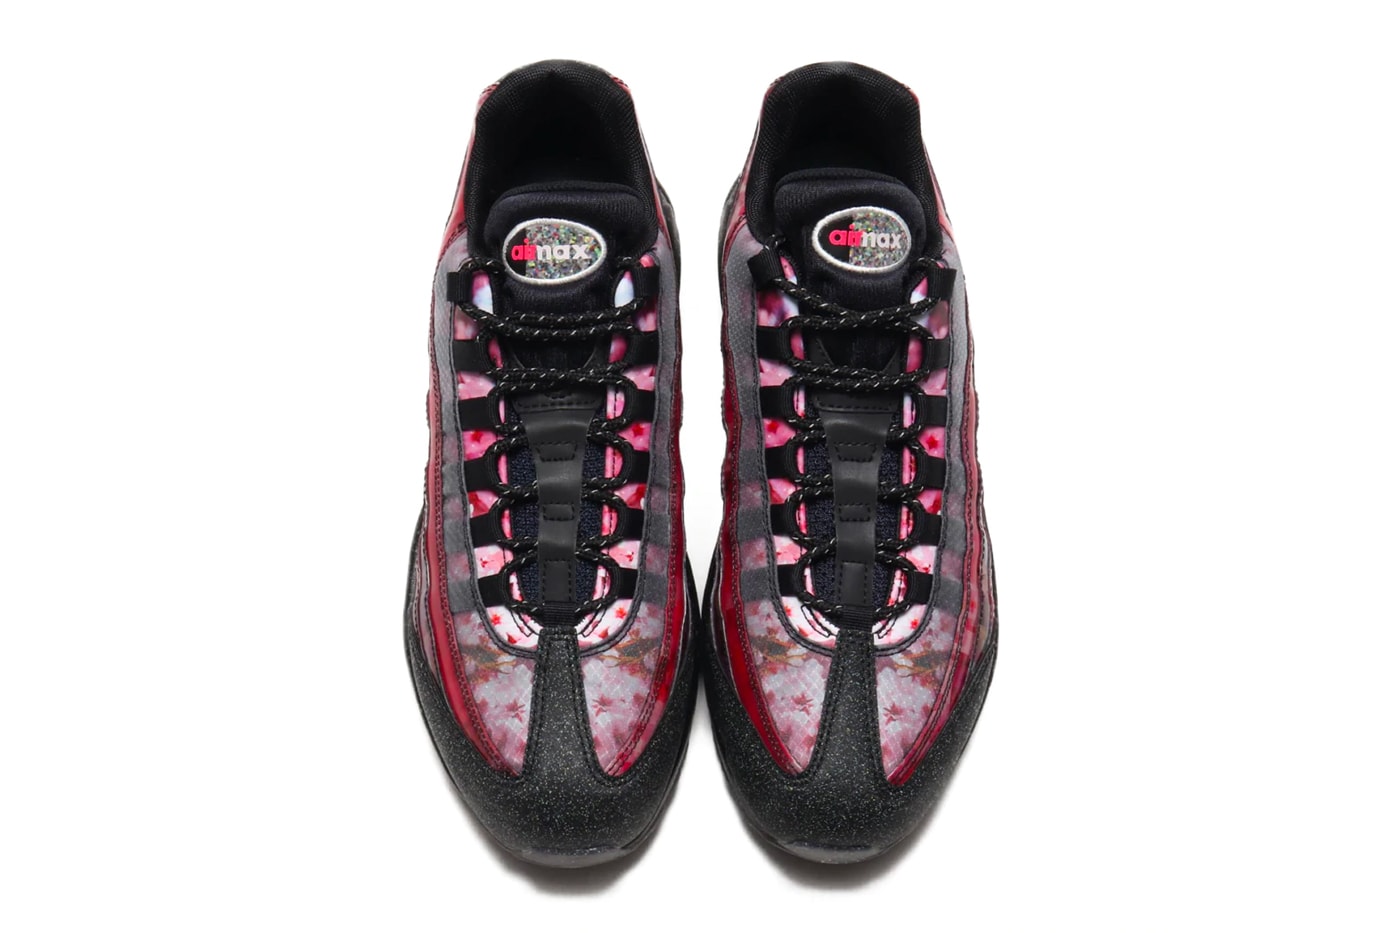 Nike Air Max 95 Premium Black Racer Pink cu6723 076 LIGHT VIOLET menswear streetwear spring summer 2020 collection footwear shoes kicks sneakers trainers runners japan exclusive